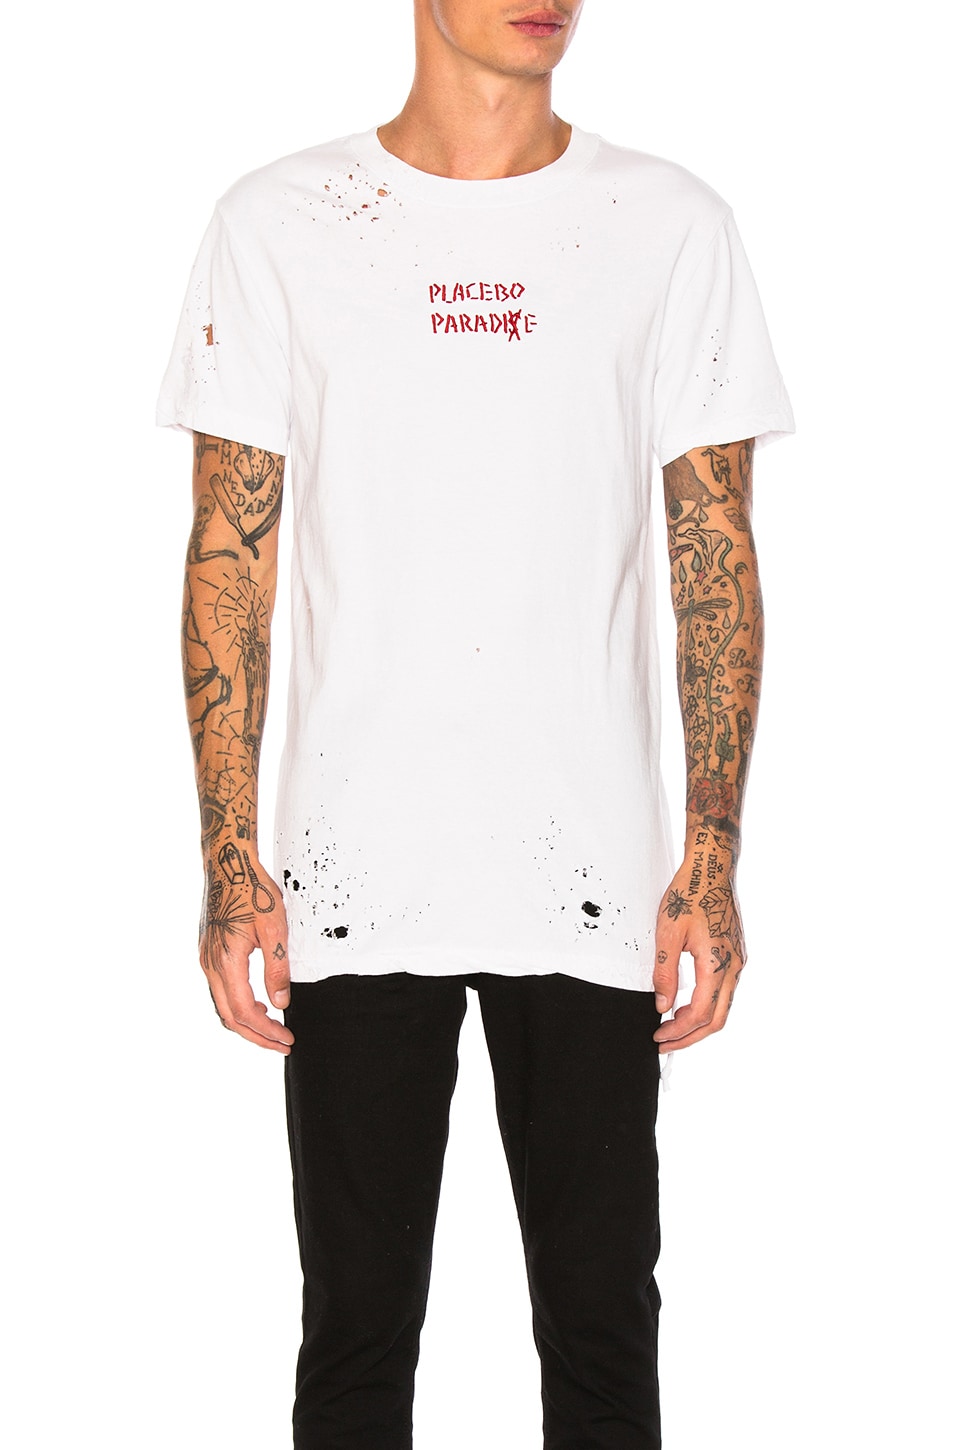 Футболка Placebo. Ksubi одежда. Reach brand футболка. Ksubi рубашка.